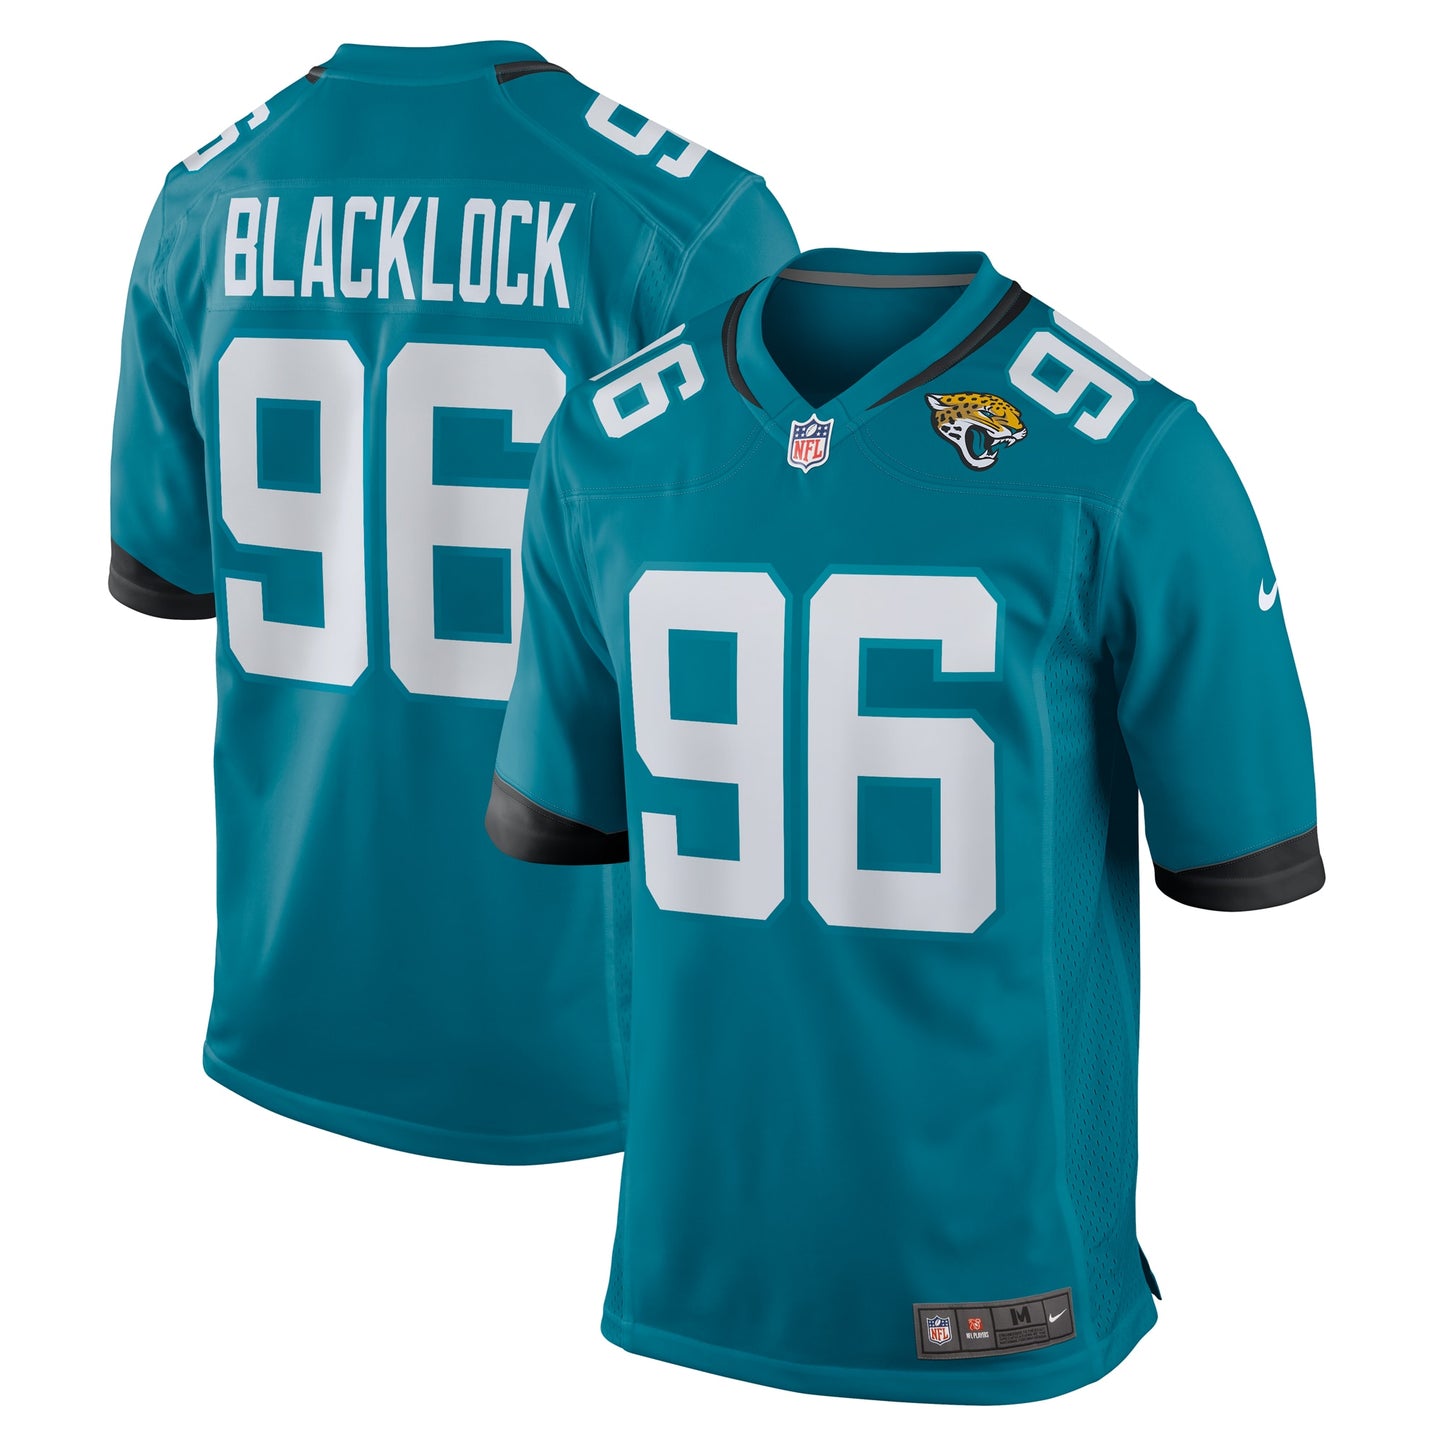 Ross Blacklock Jacksonville Jaguars Nike Team Game Jersey - Teal